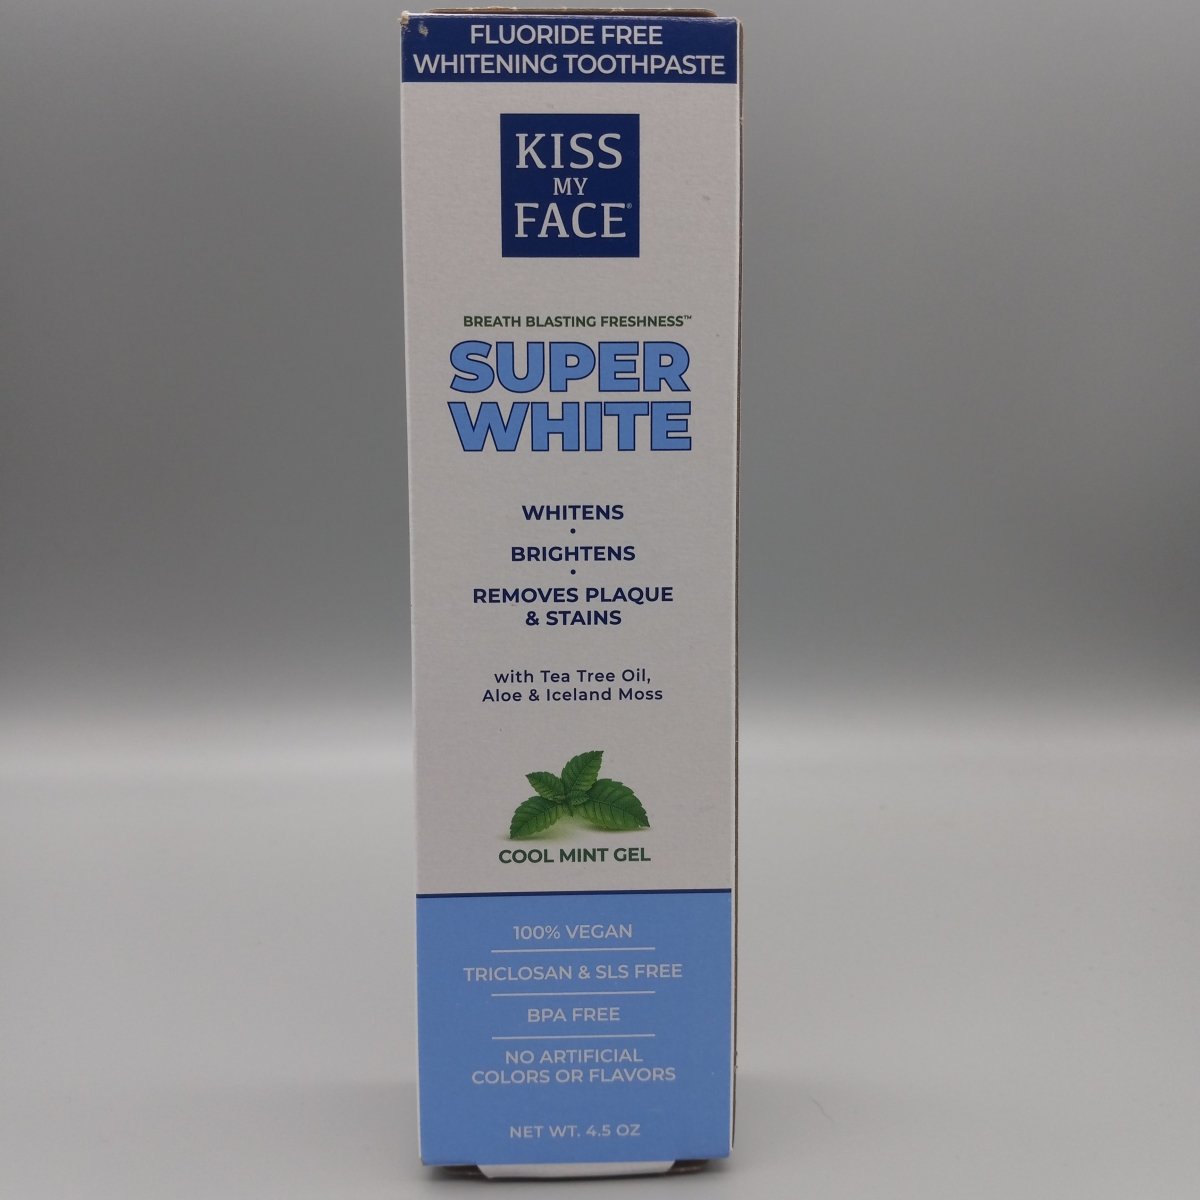 Super White - Fluoride Free Whitening Toothpaste - Cool Mint Gel - Tea Tree Oil + Aloe + Iceland Moss - 4.5oz